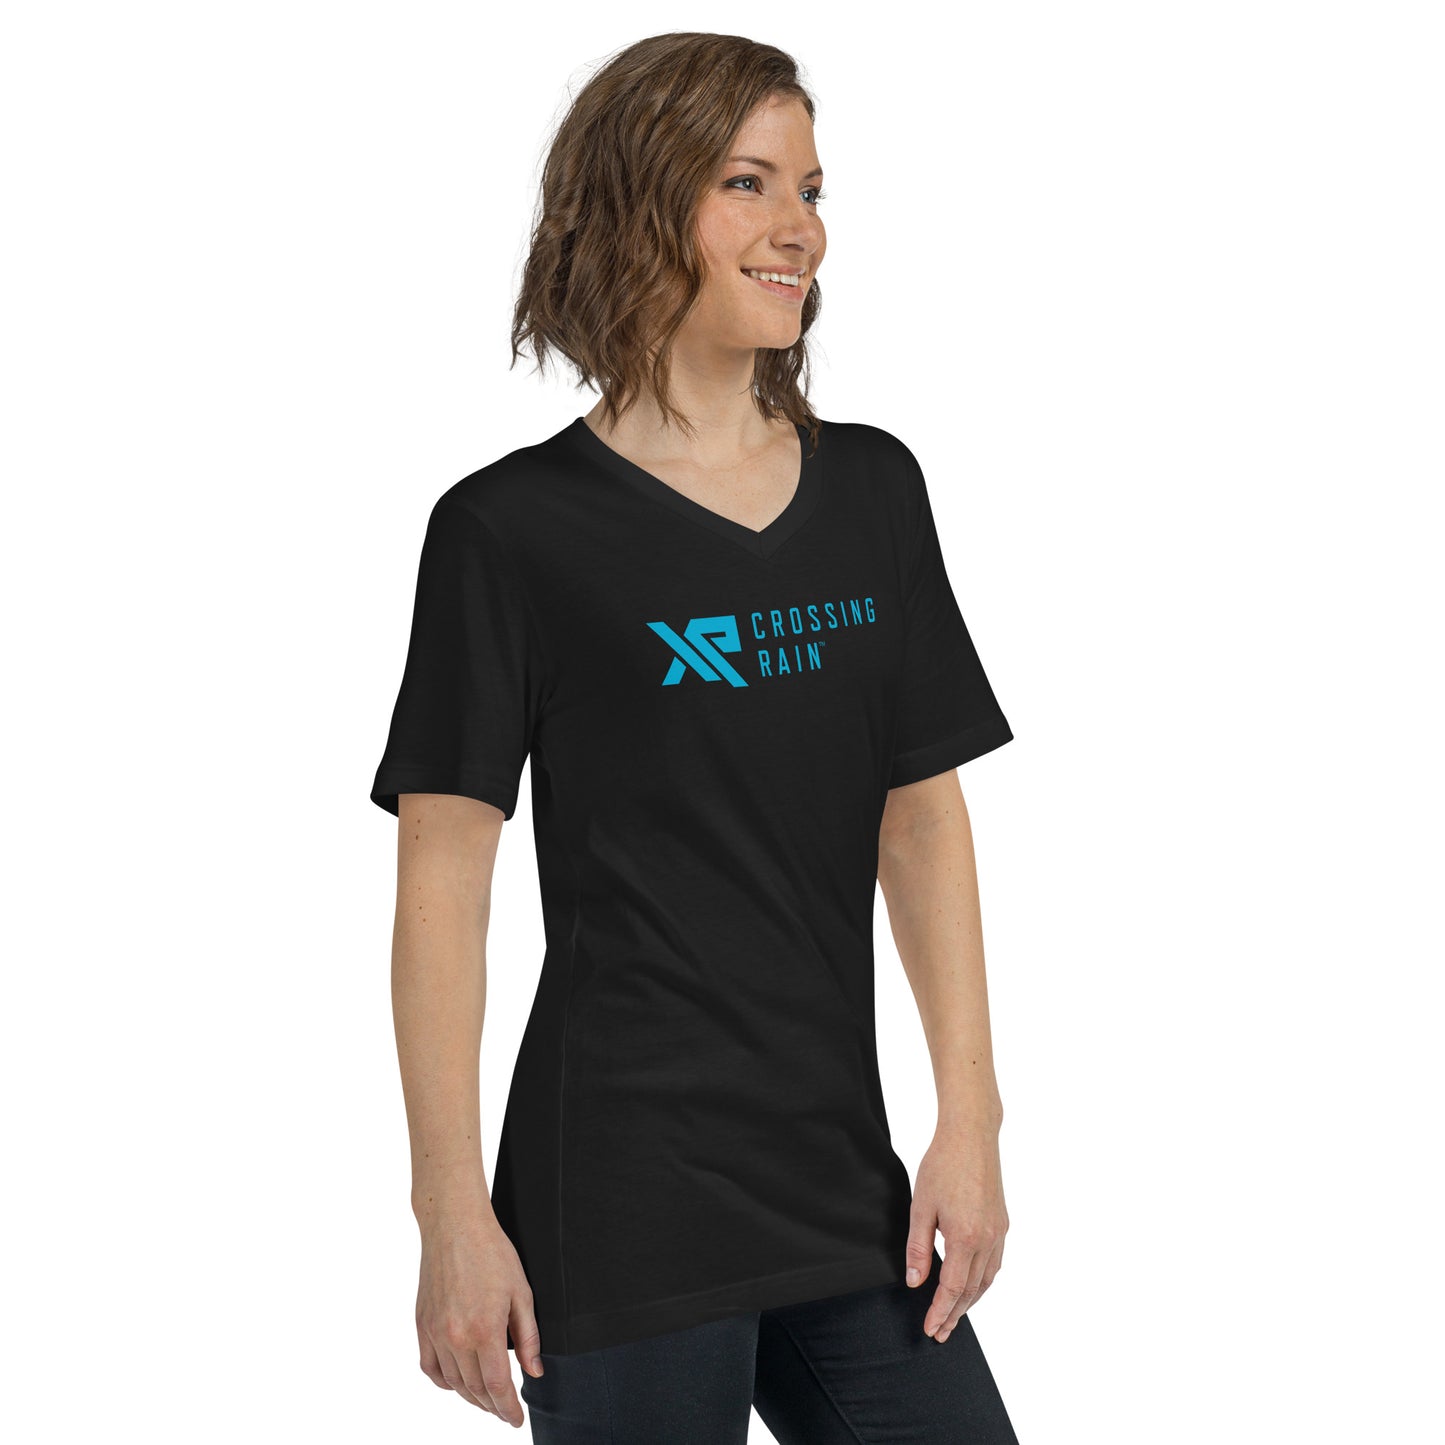 Unisex XR Crossing Rain Short Sleeve V-Neck T-Shirt